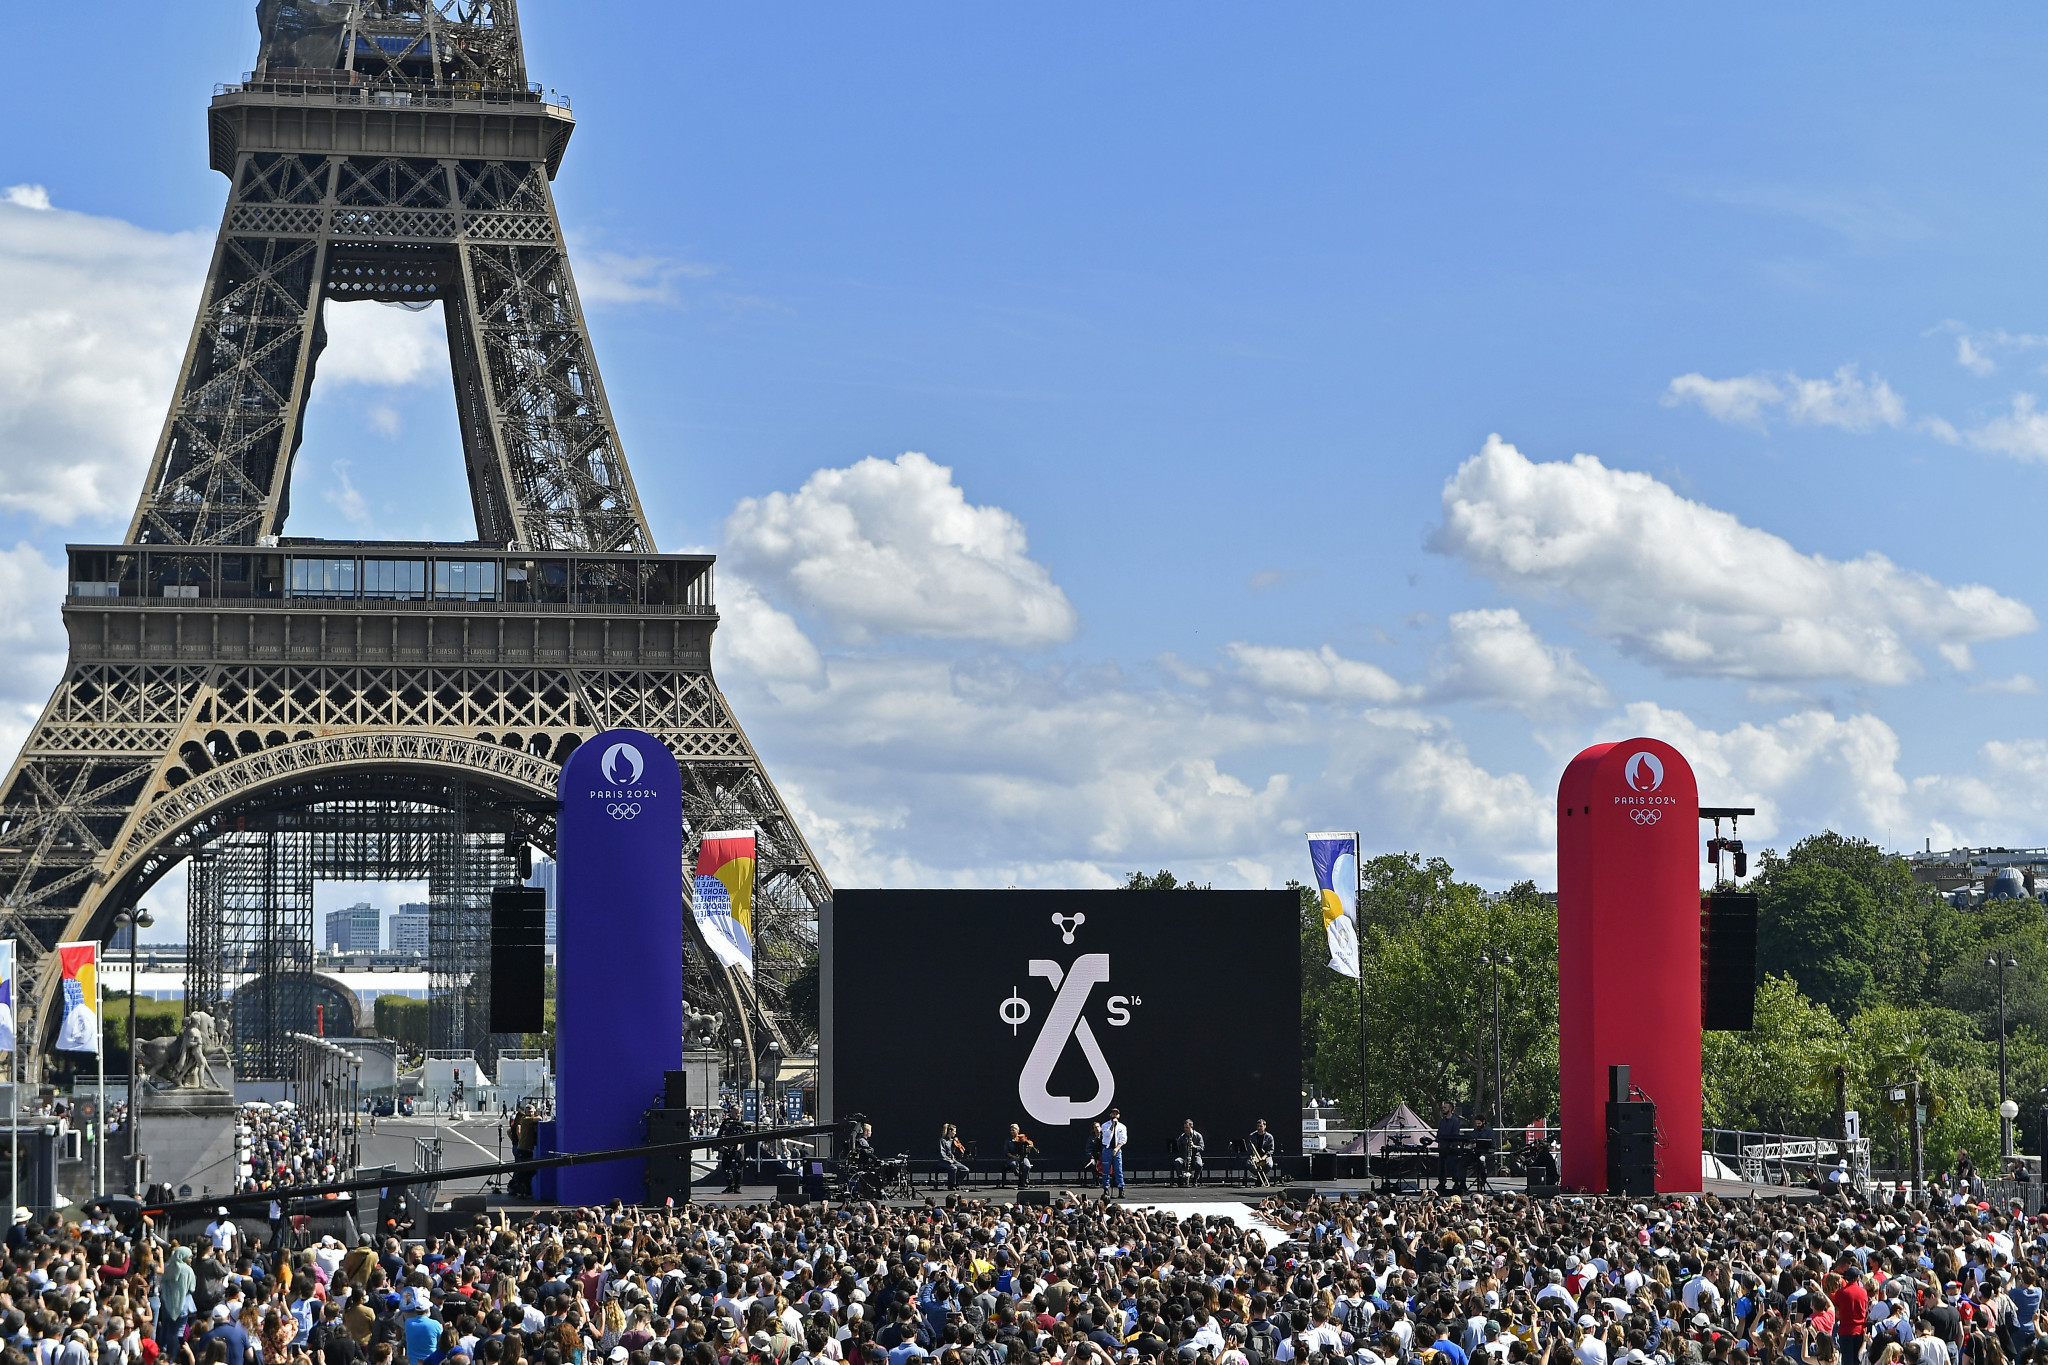 Paris 2024 receives 239 applications for potential fan zones